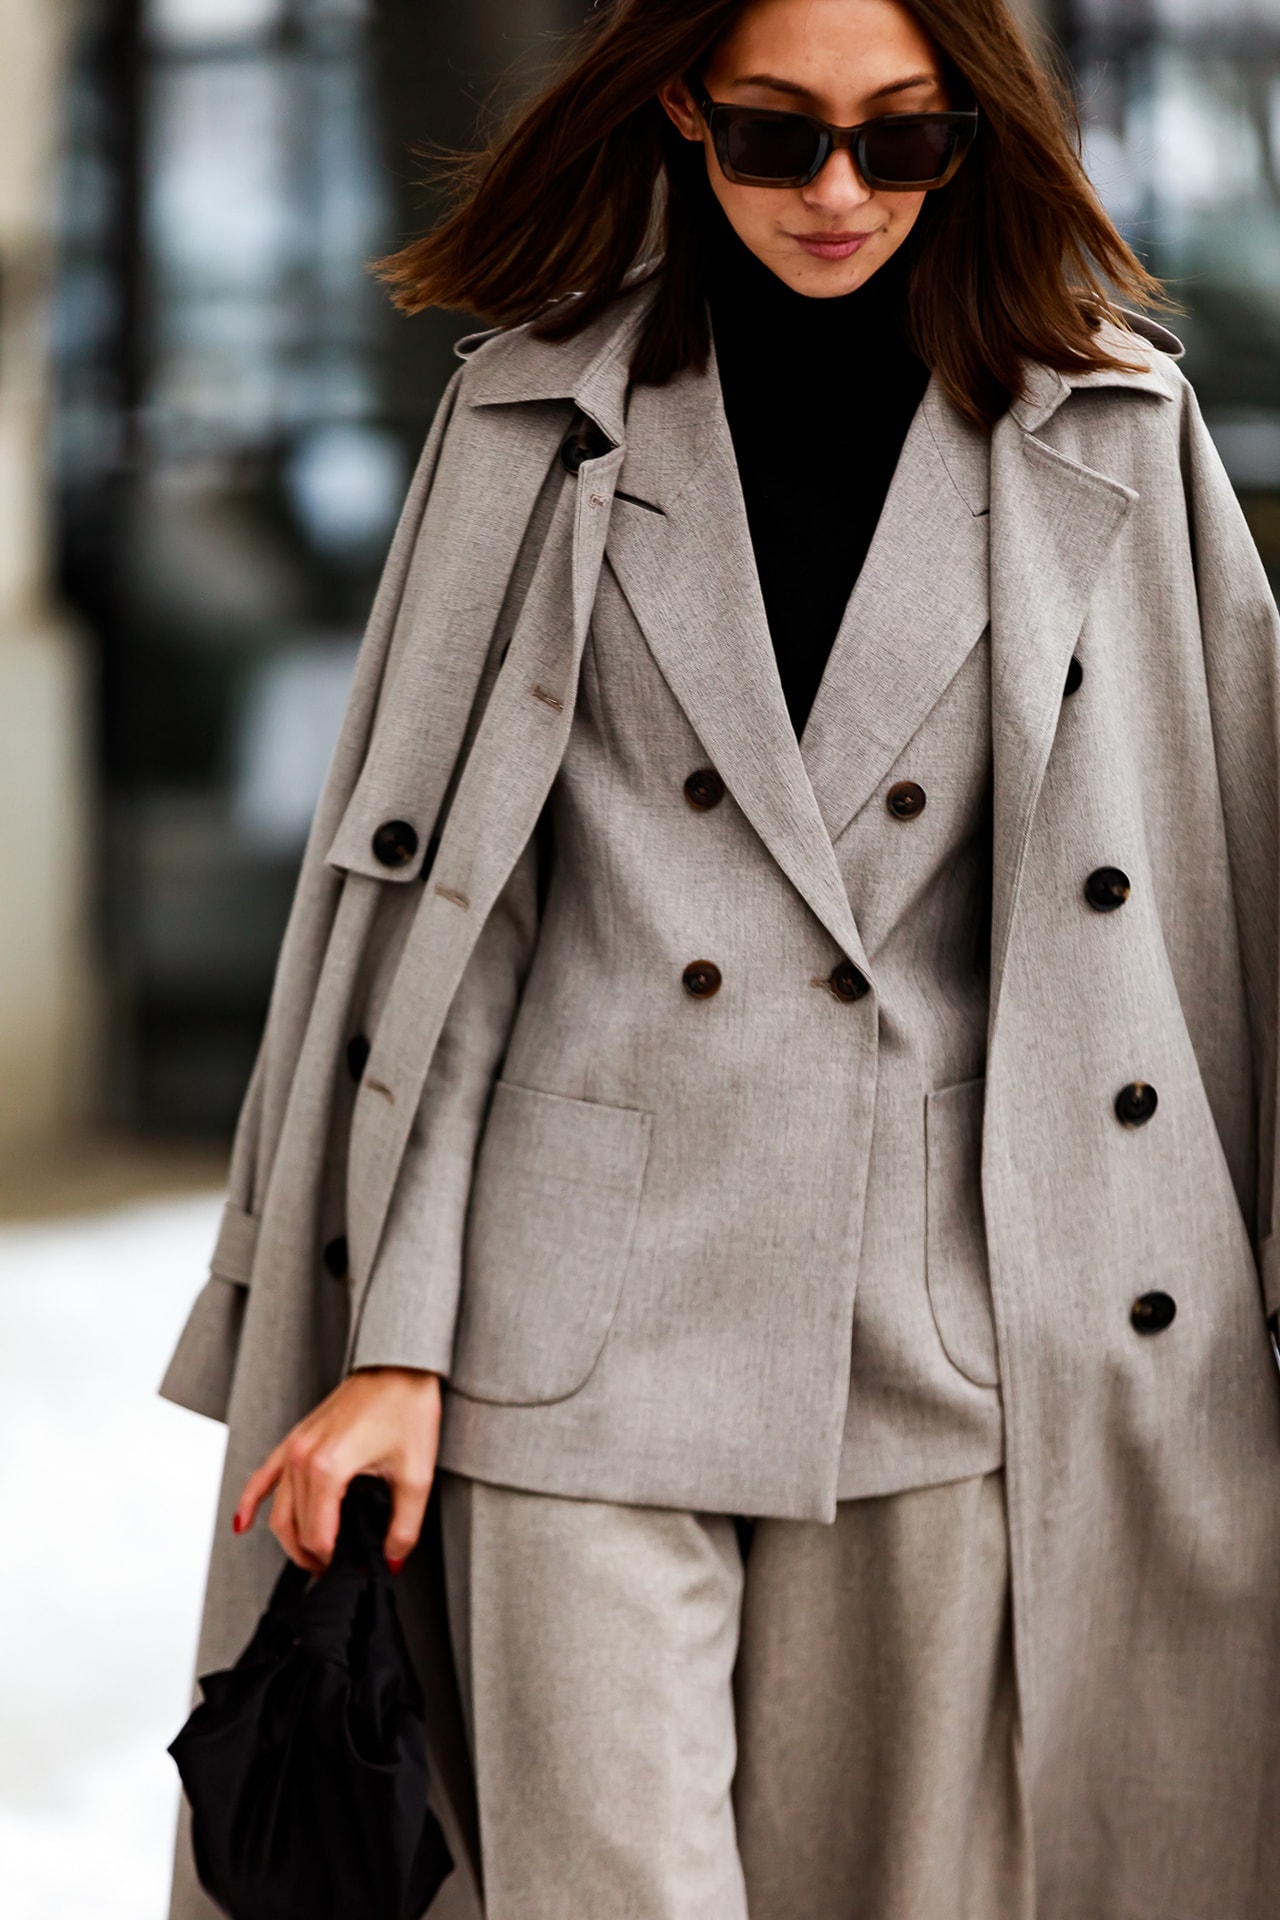 stockholm fashion week street style blogger influencer coat blazer suit sunglasses